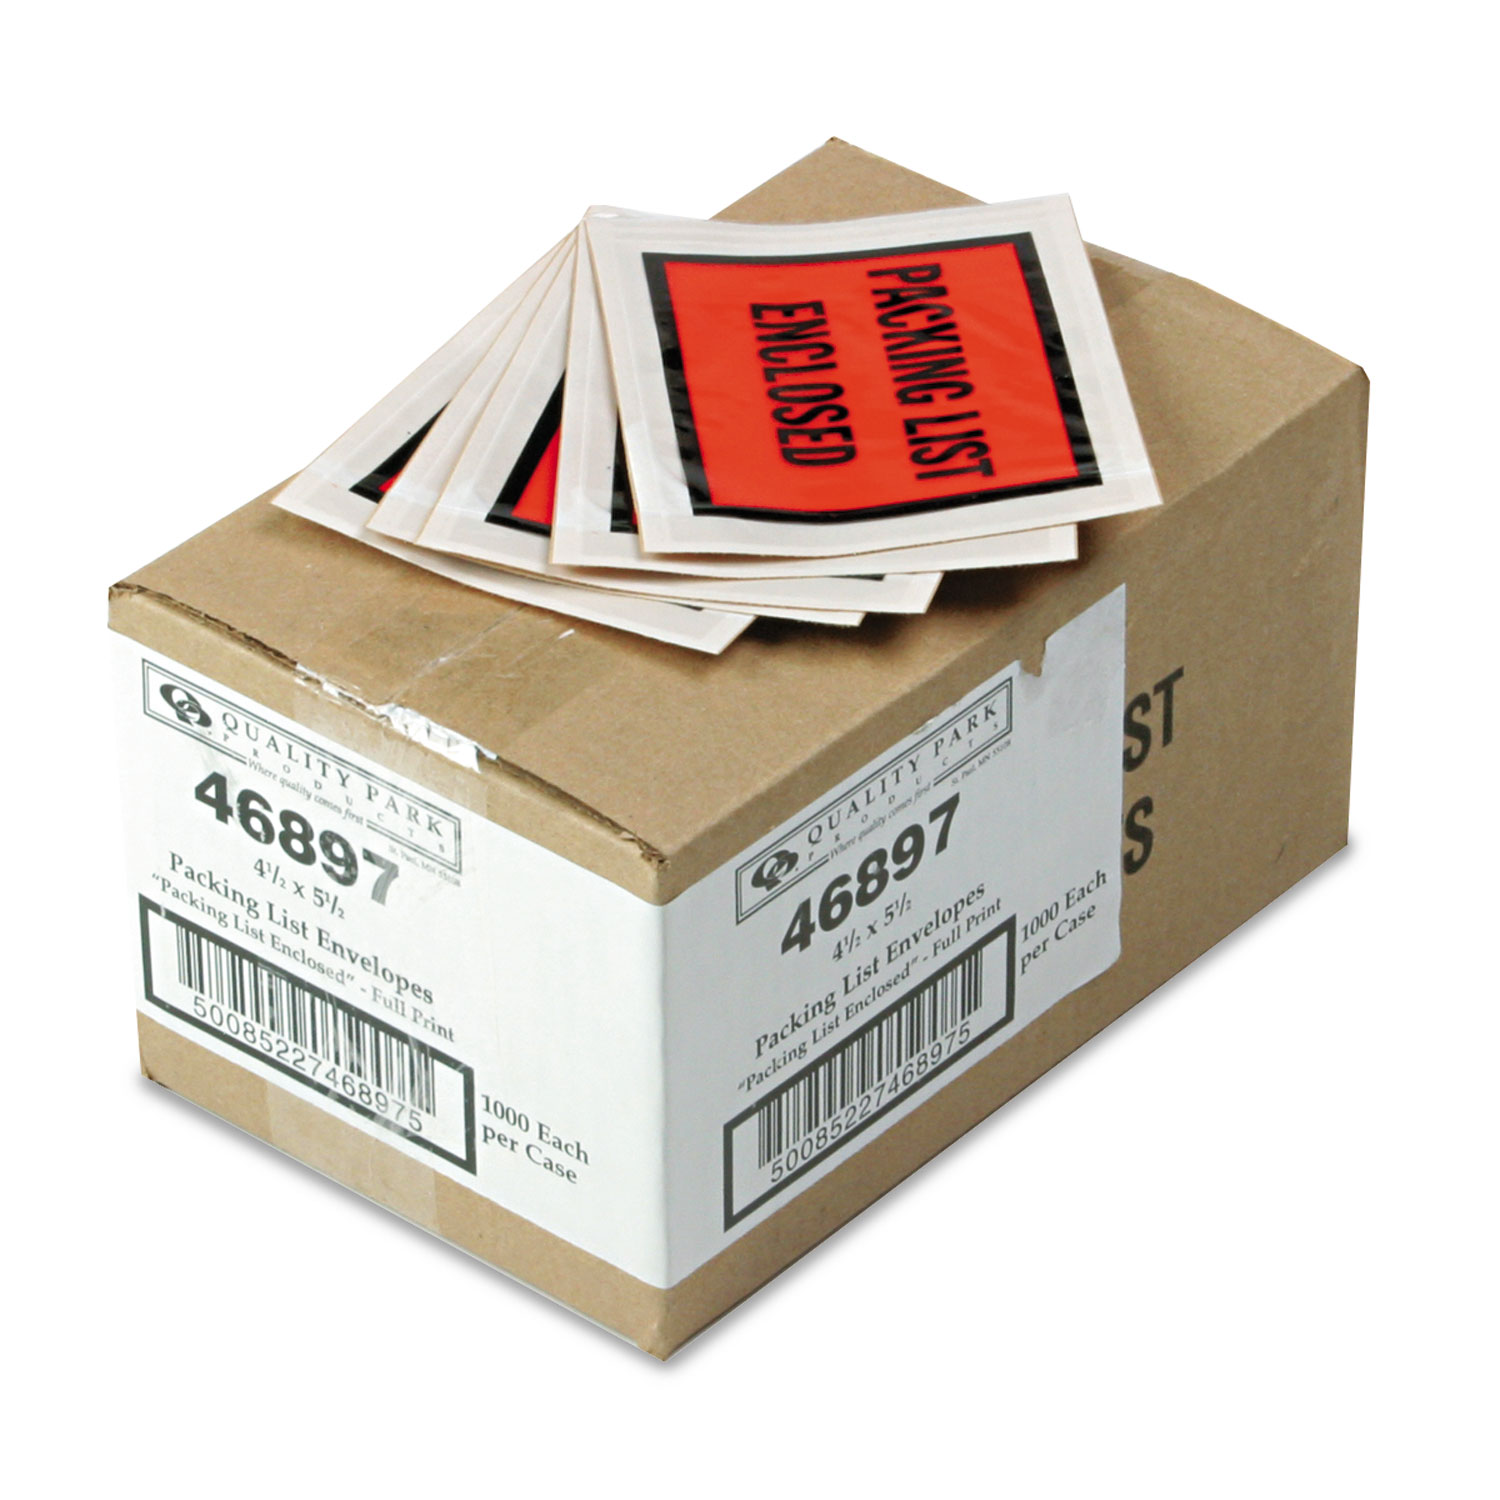  Quality Park QUA46897 Self-Adhesive Packing List Envelope, 4.5 x 5.5, Orange, 1,000/Carton (QUA46897) 